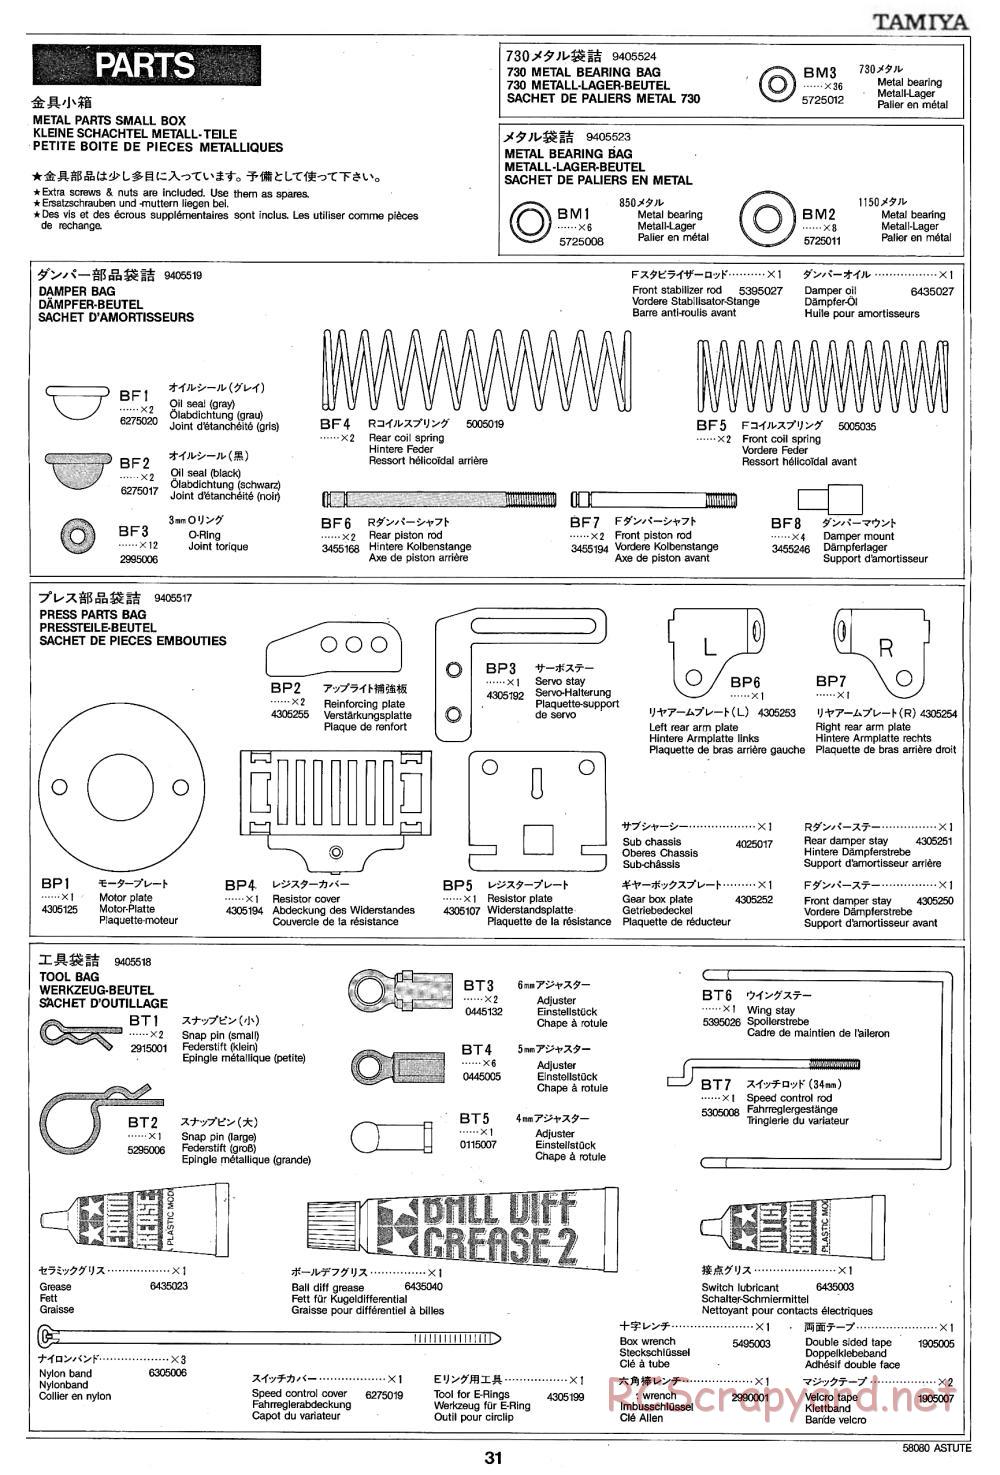 Tamiya - Astute - 58080 - Manual - Page 31